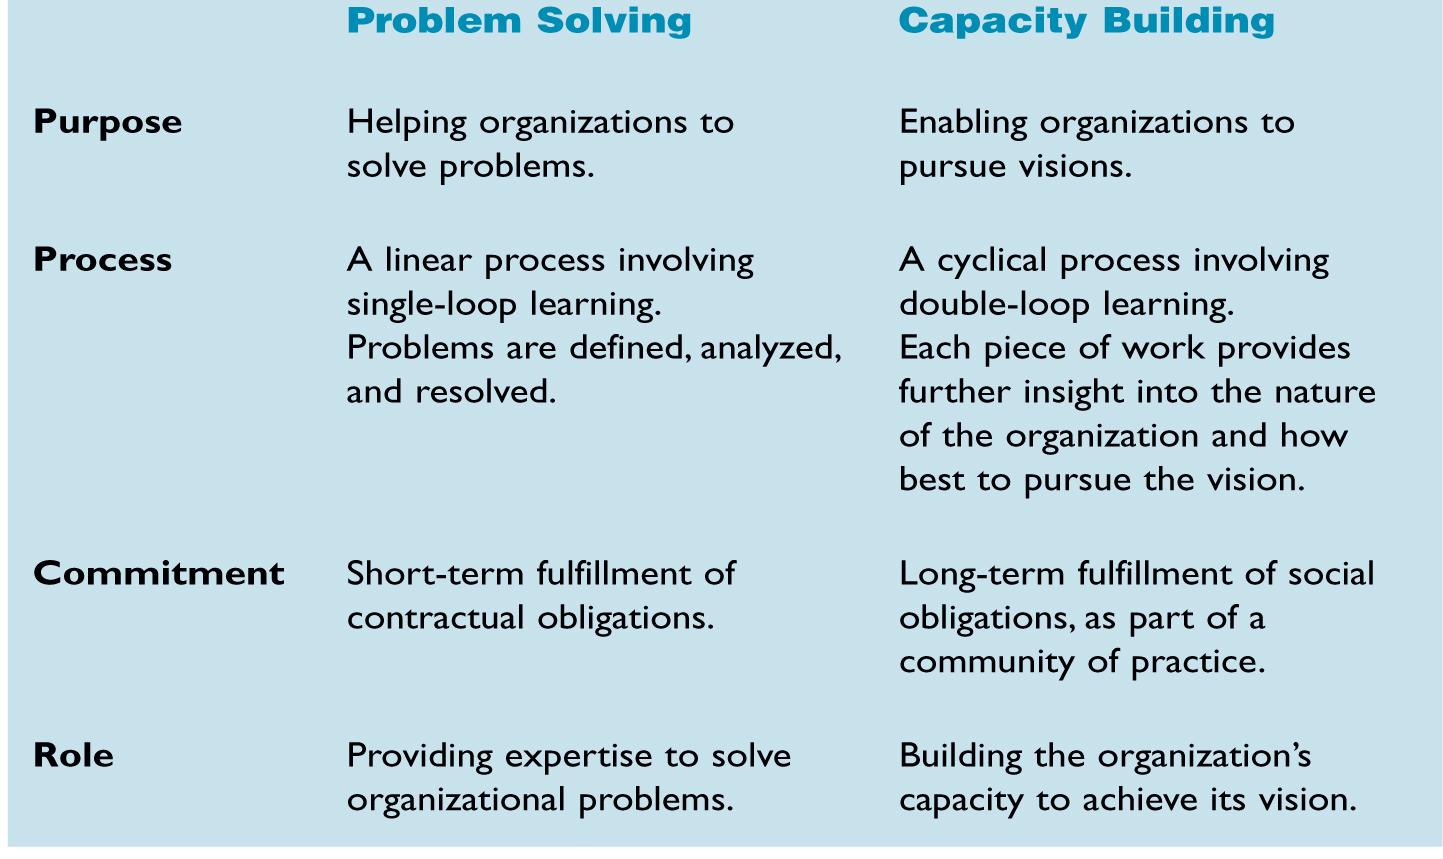 Problem Solving vs. Capacity Building